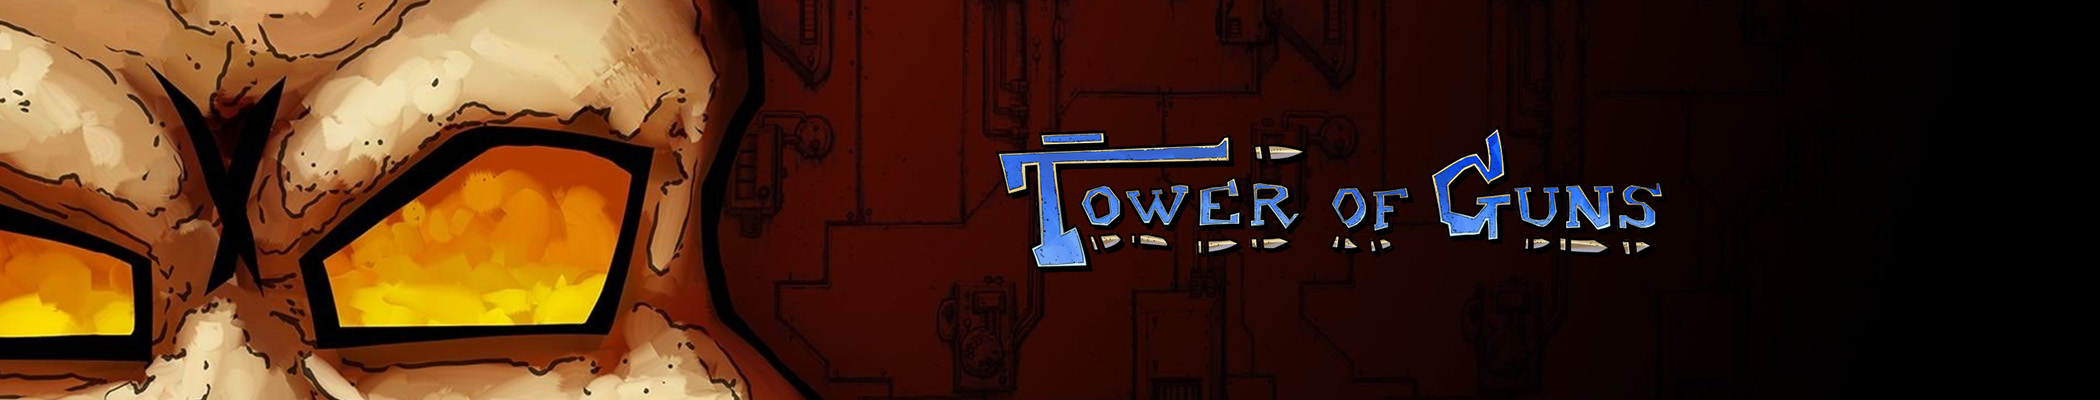 Tower of Guns – Terrible Posture Games